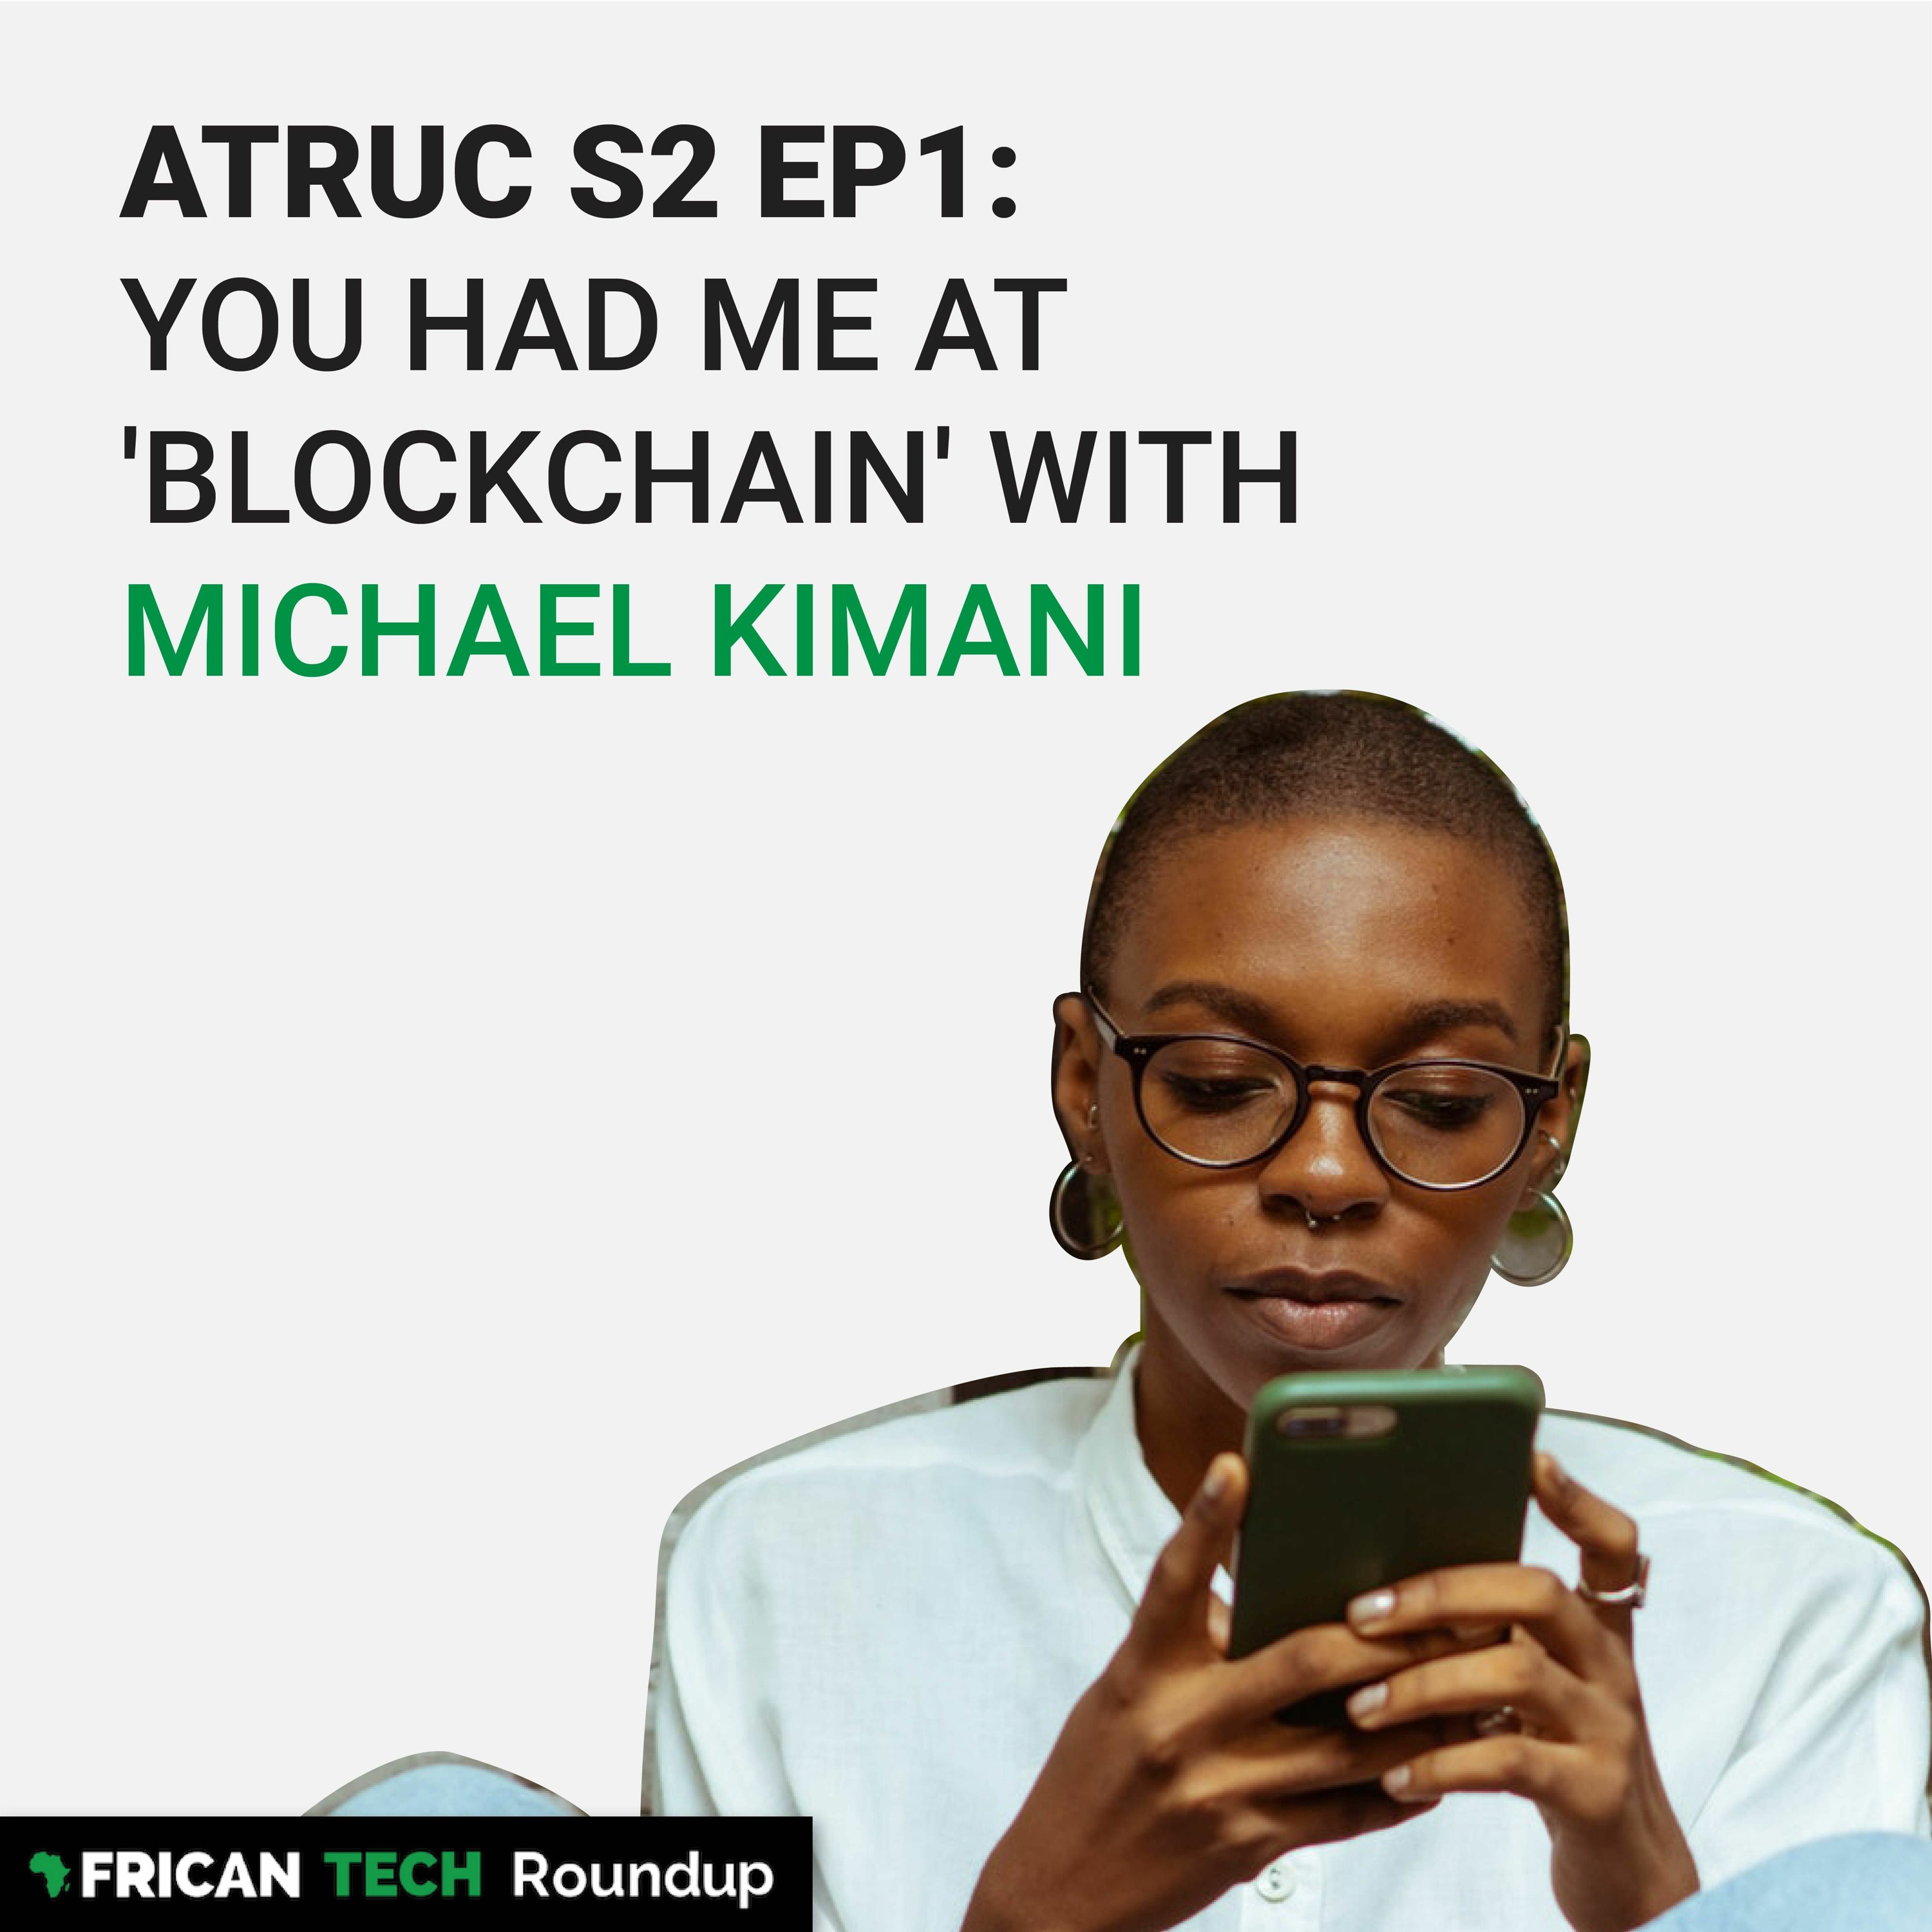 ATRUC S2 EP1: You Had Me At Blockchain with Michael Kimani